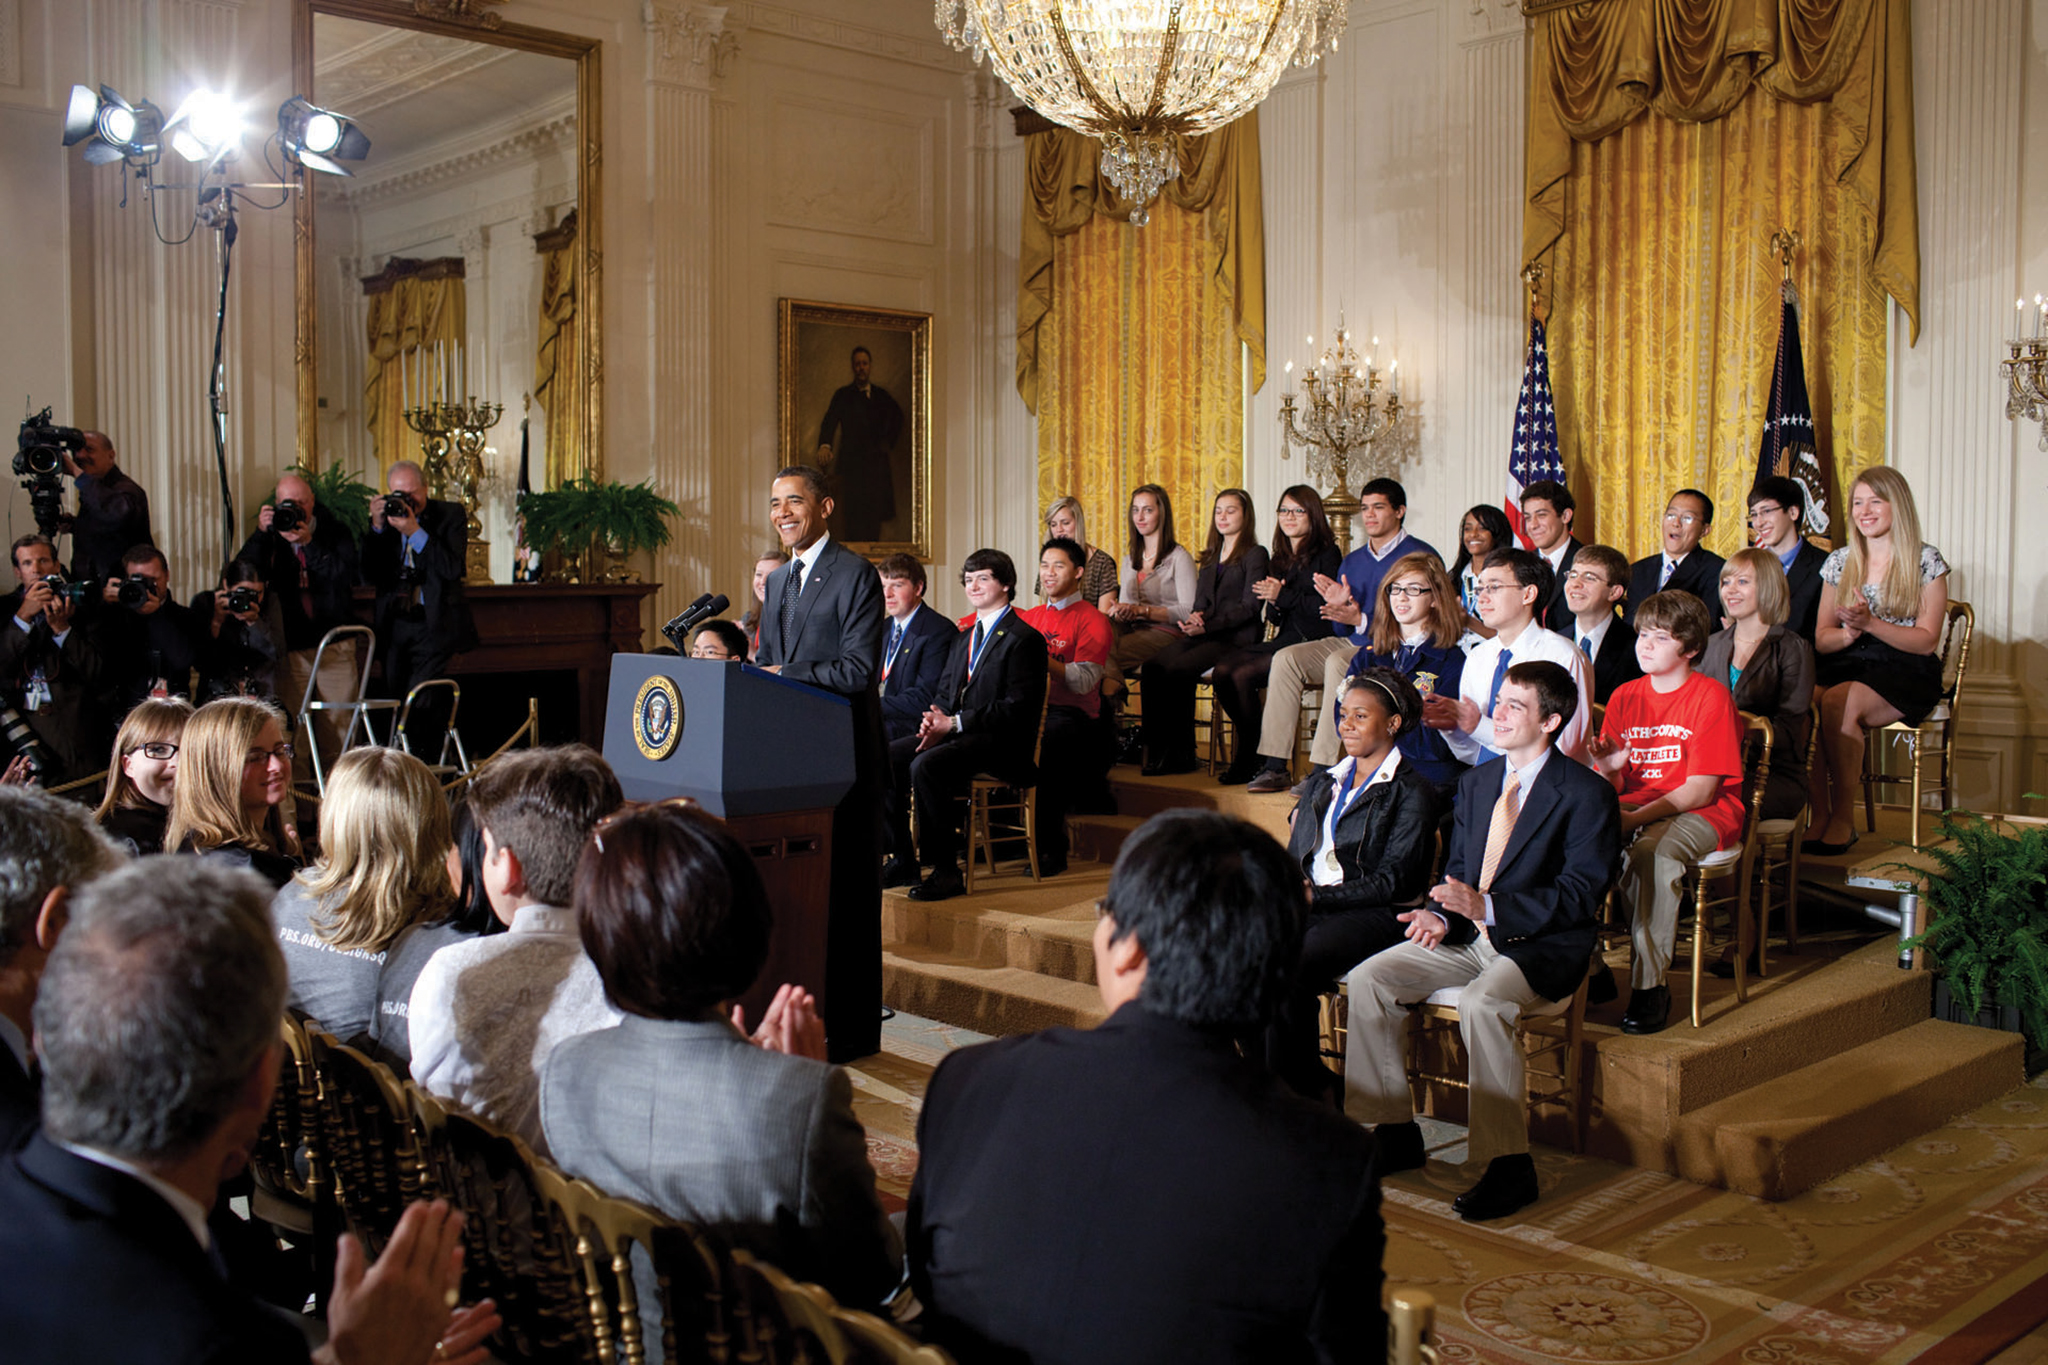 Alumni listen to President Obama’s speech at the White House Science Fair